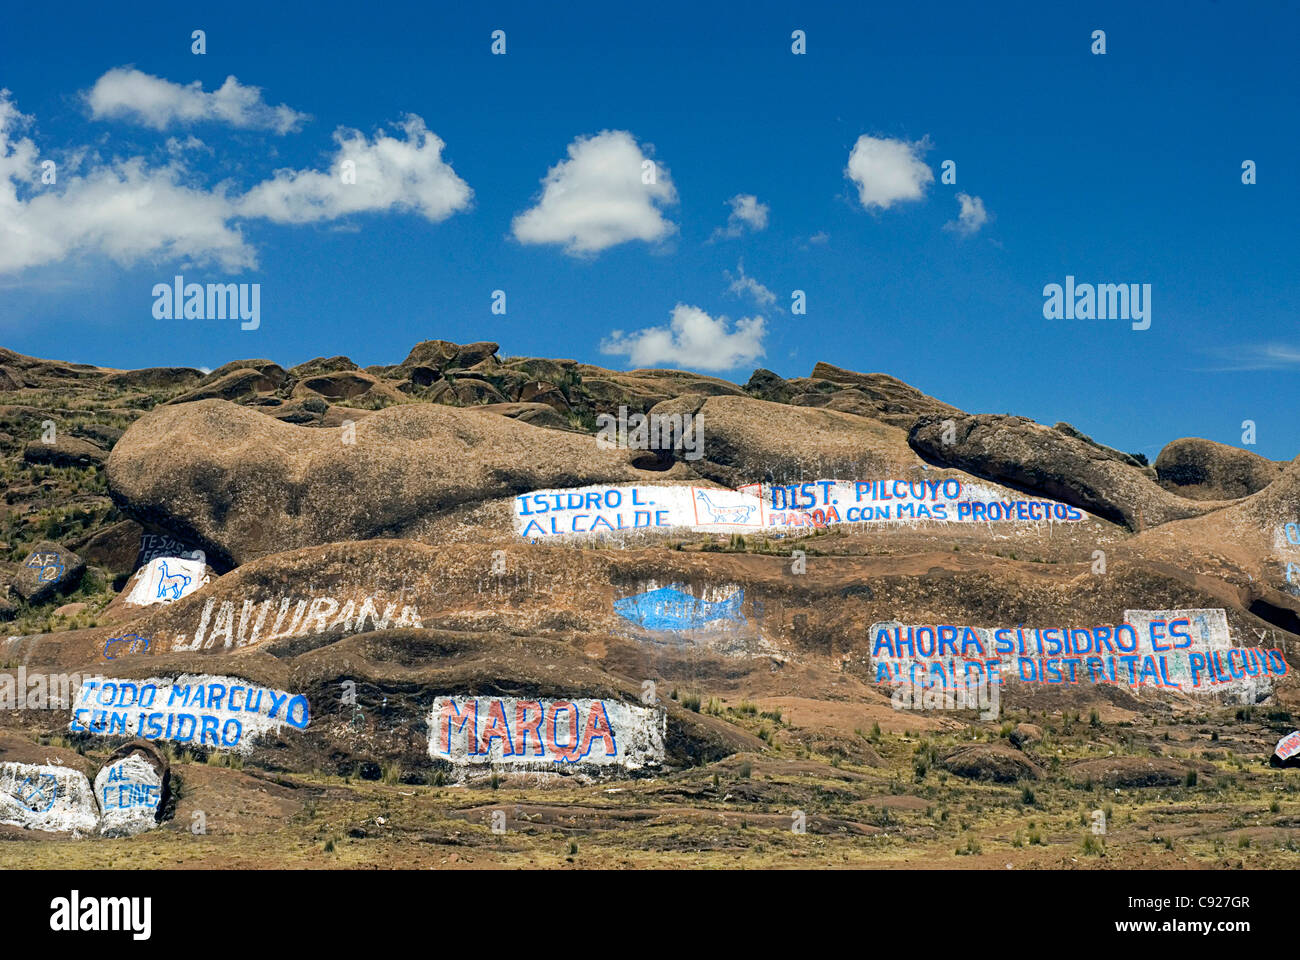 Peru, Lake Titicaca, Juli, political slogans painted on rocks Stock Photo